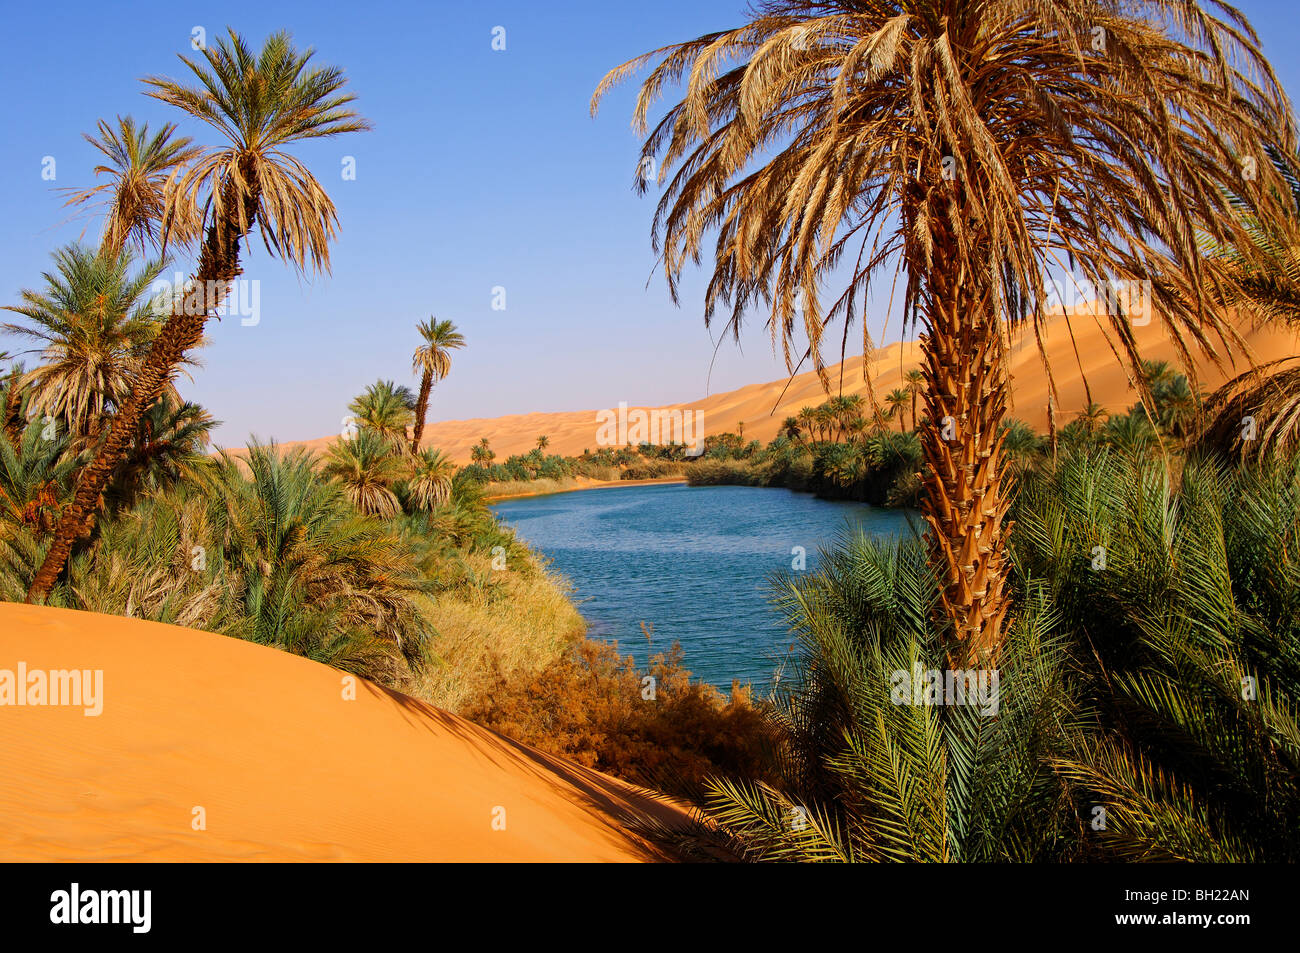 Date Palm trees on the shore of the Um el Maa lake in the Awbari sand sea, Sahara desert, Libya Stock Photo